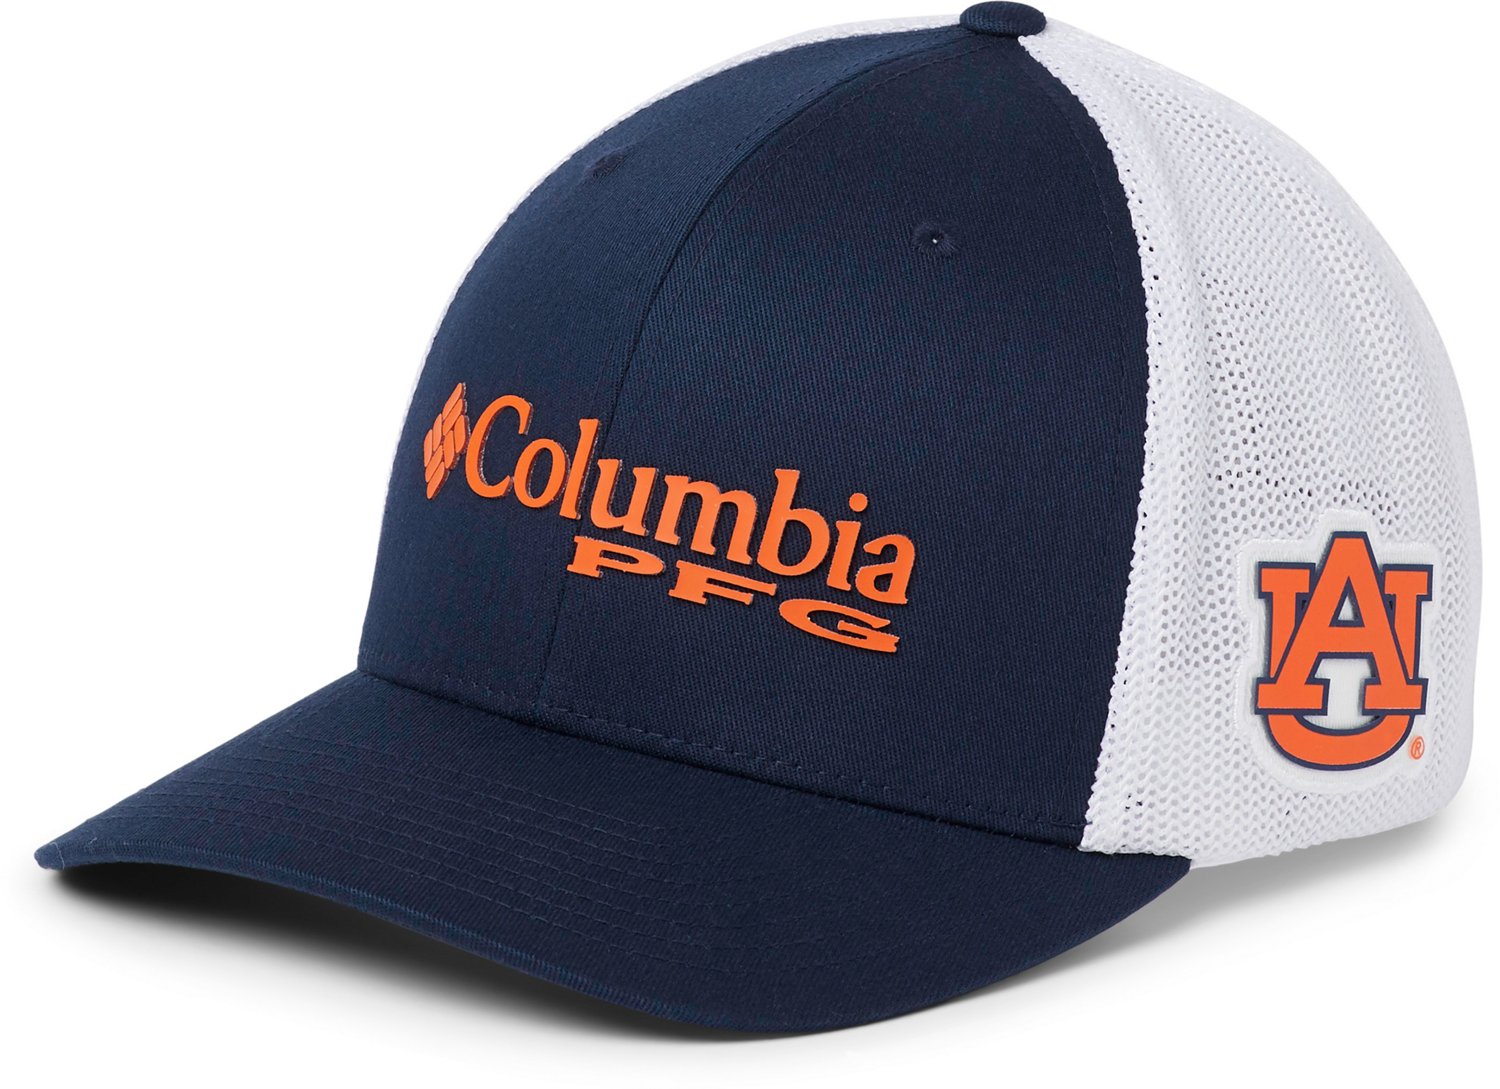 Columbia Sportswear Men's Auburn University Collegiate PFG Mesh